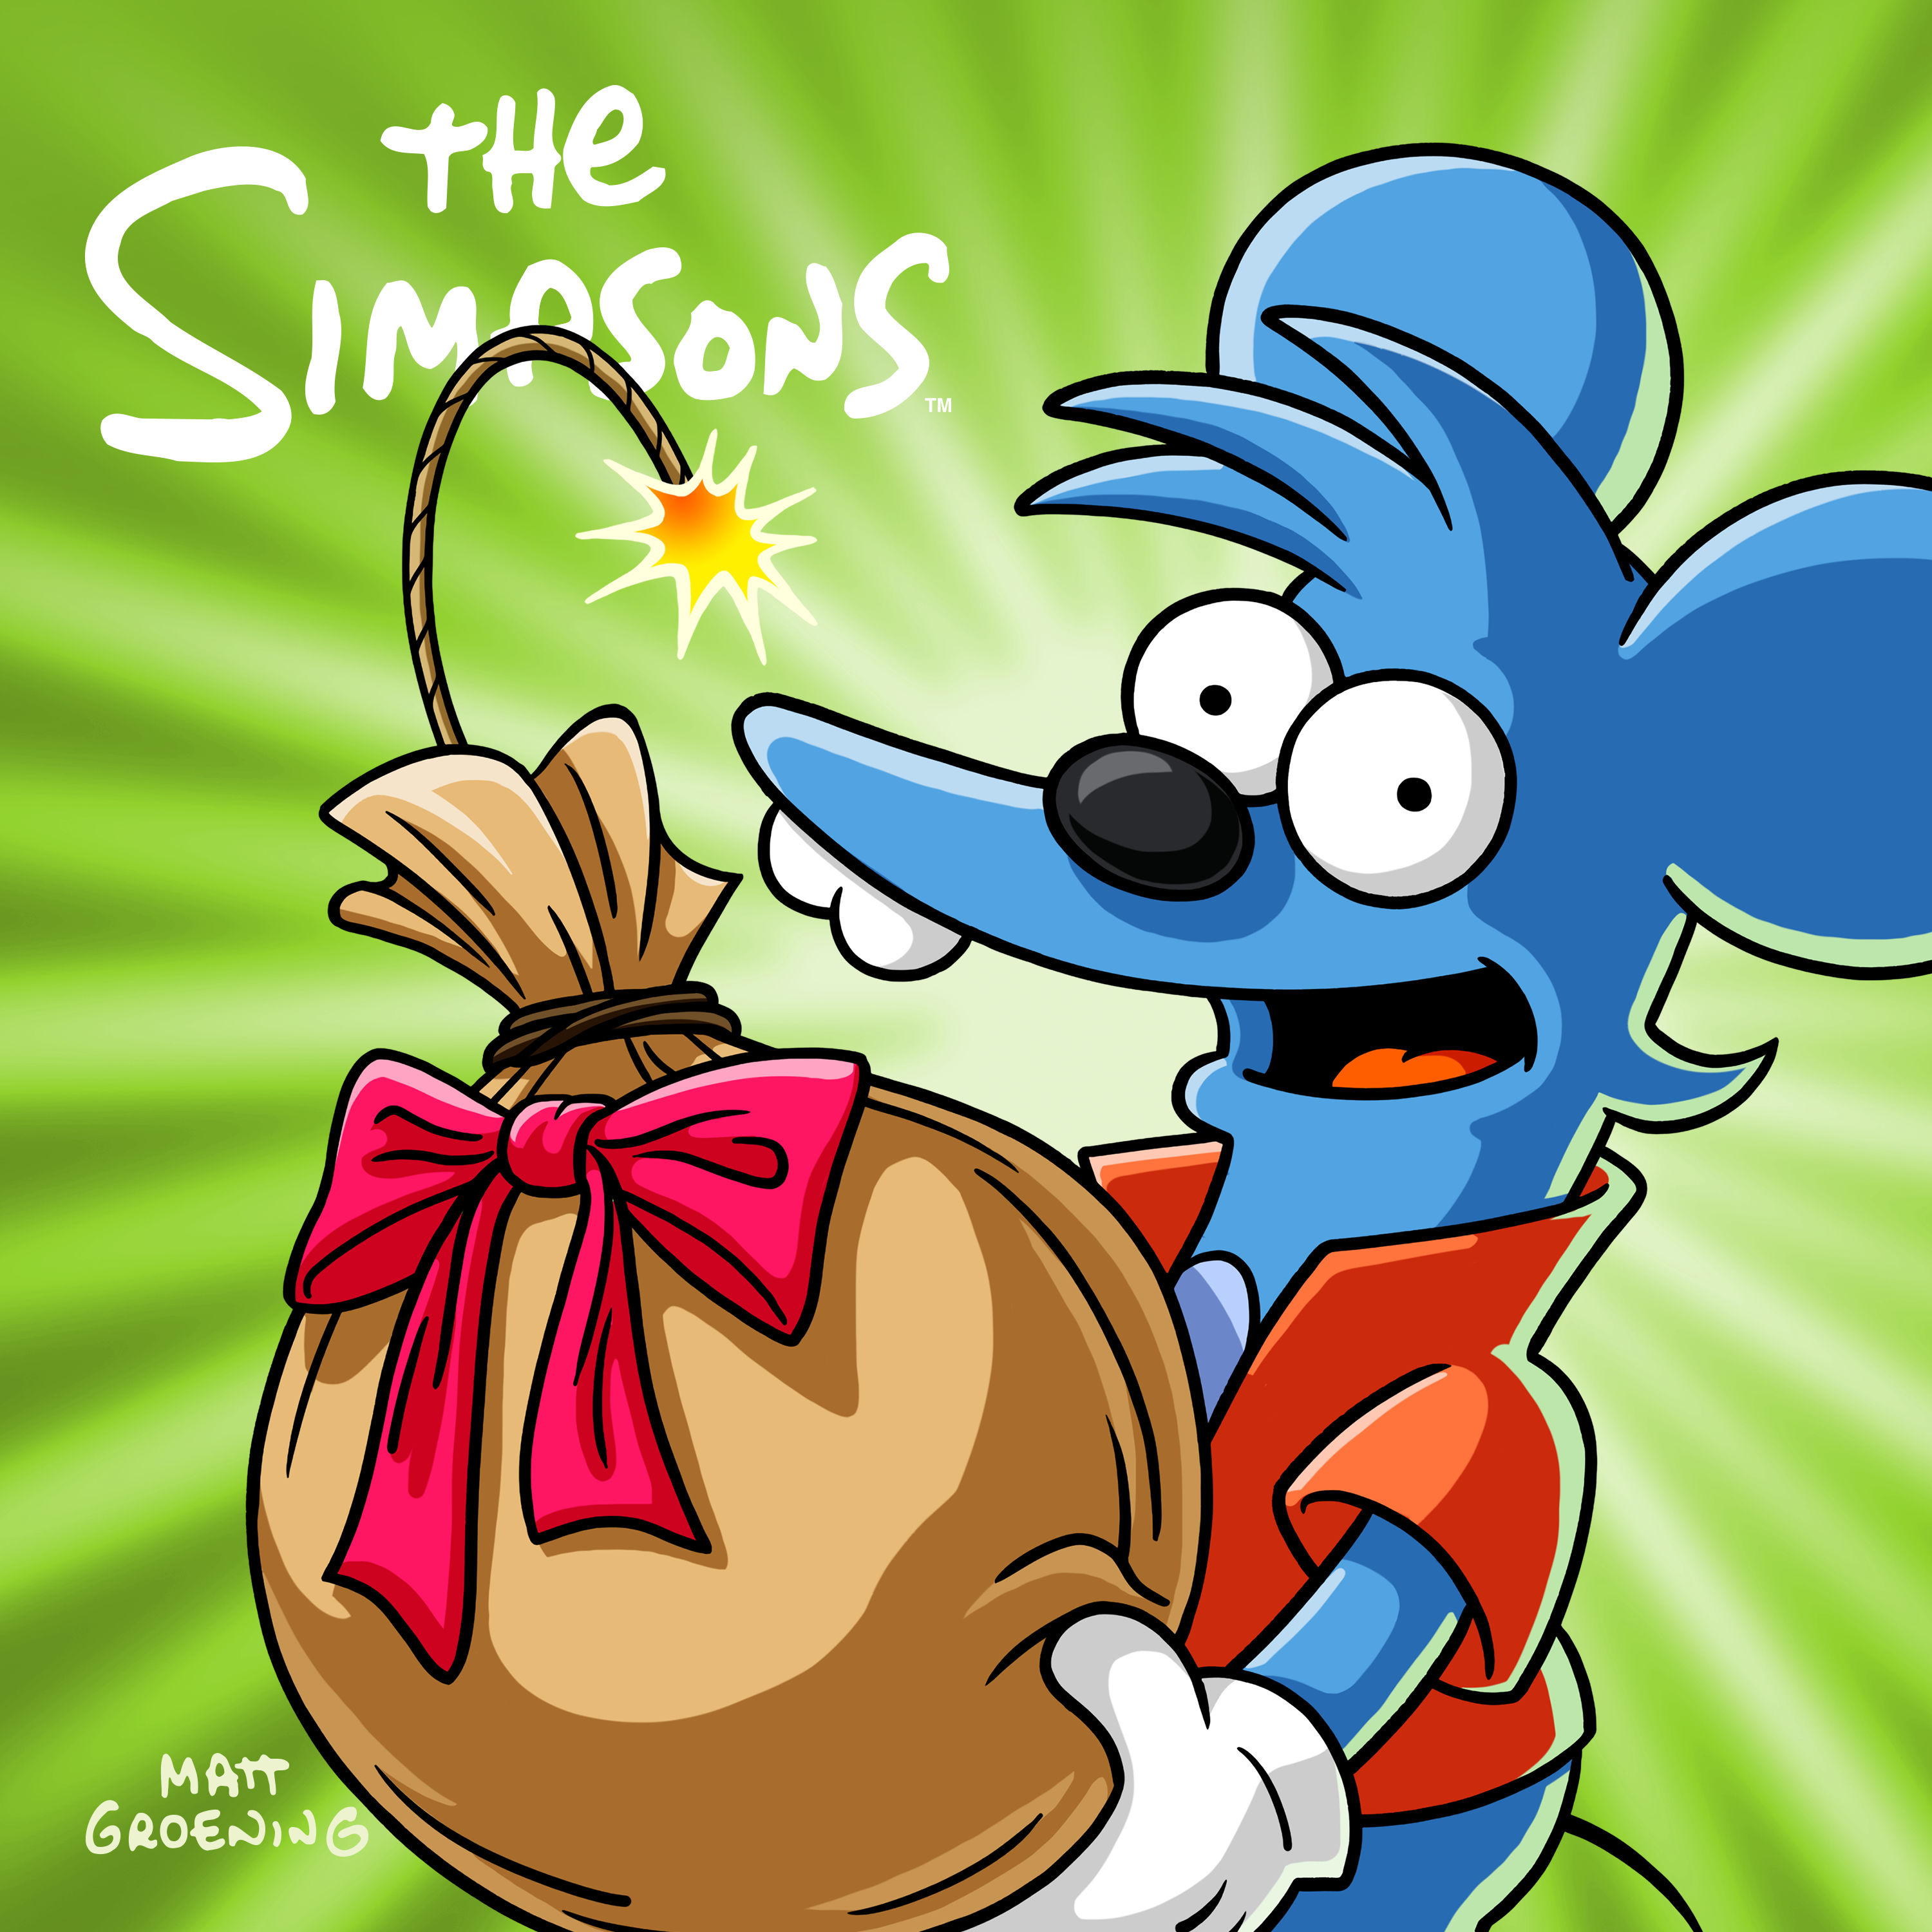 the simpsons season 30 episode 12 watch online free